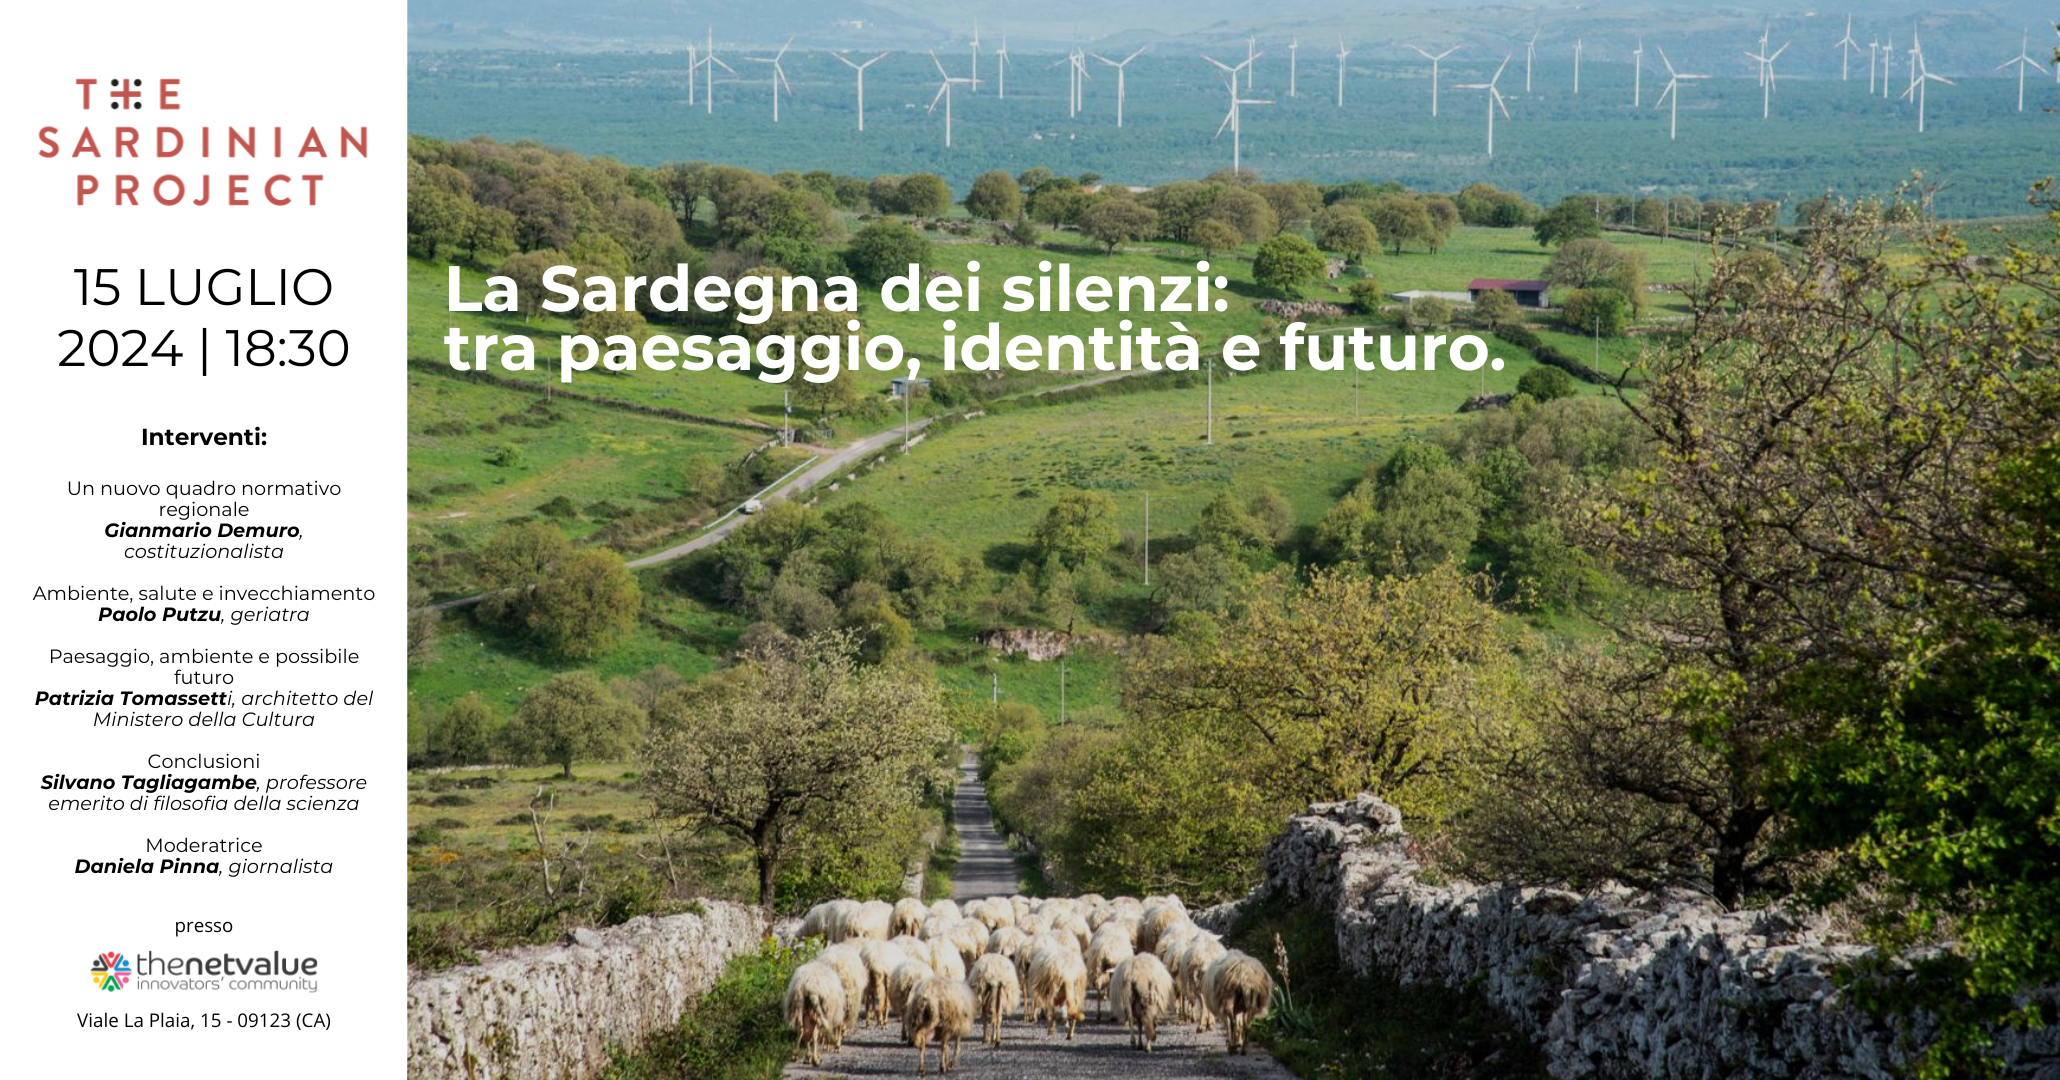 The Sardinian Project | La Sardegna dei silenzi